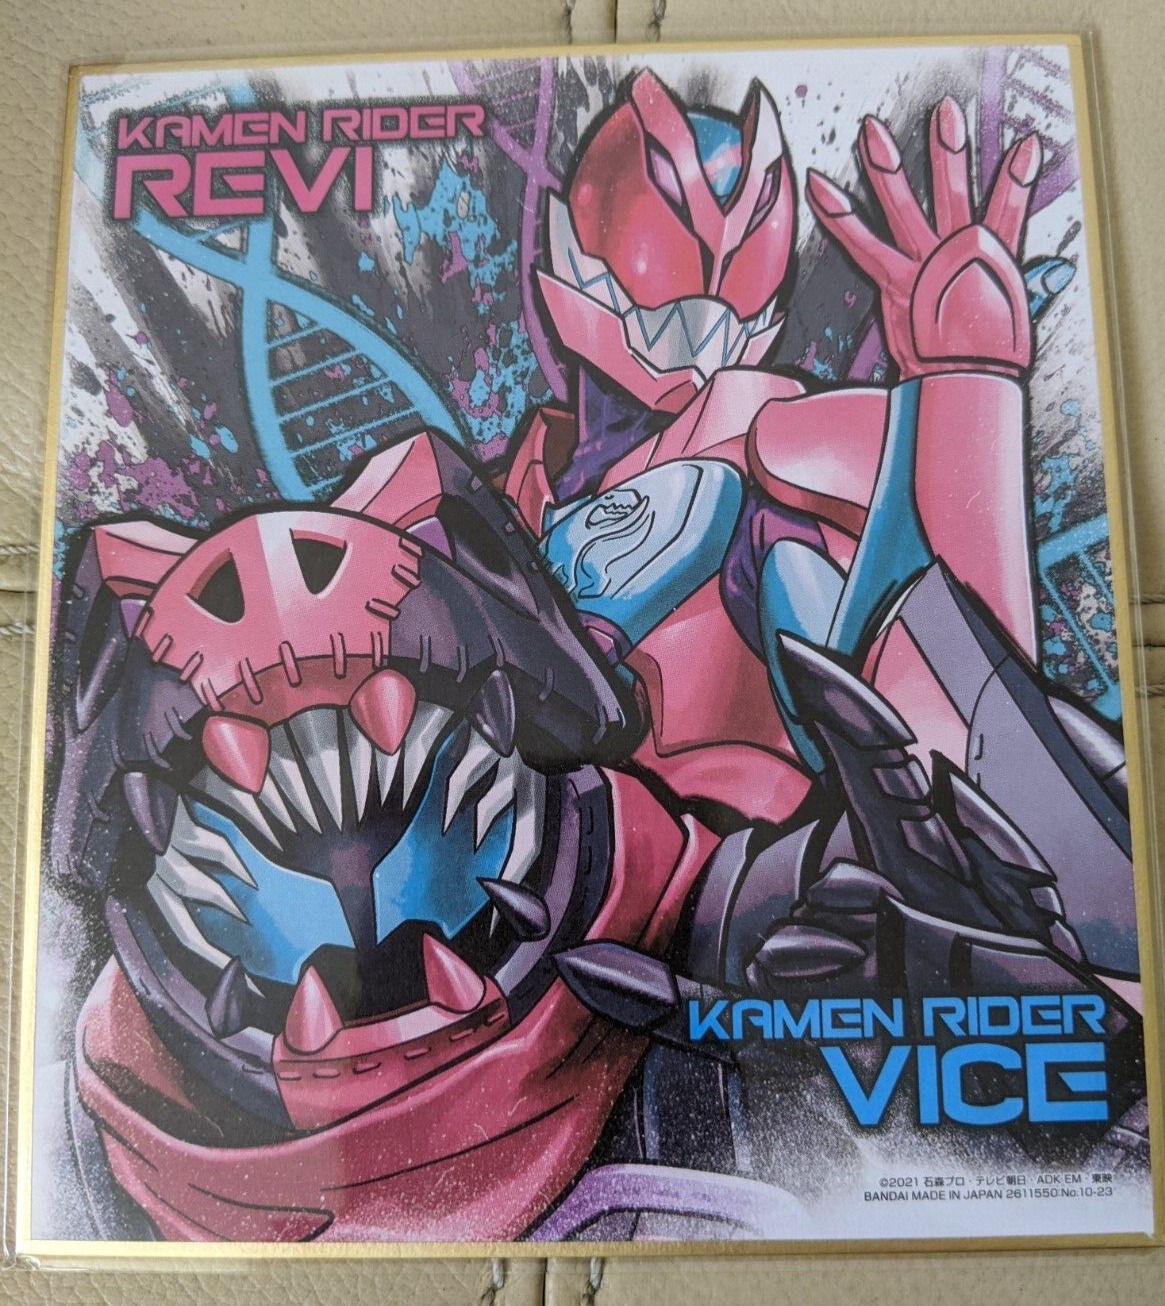 Kamen Rider Shikishi Art Selection 1 REVICE REVI VICE REX GENOME